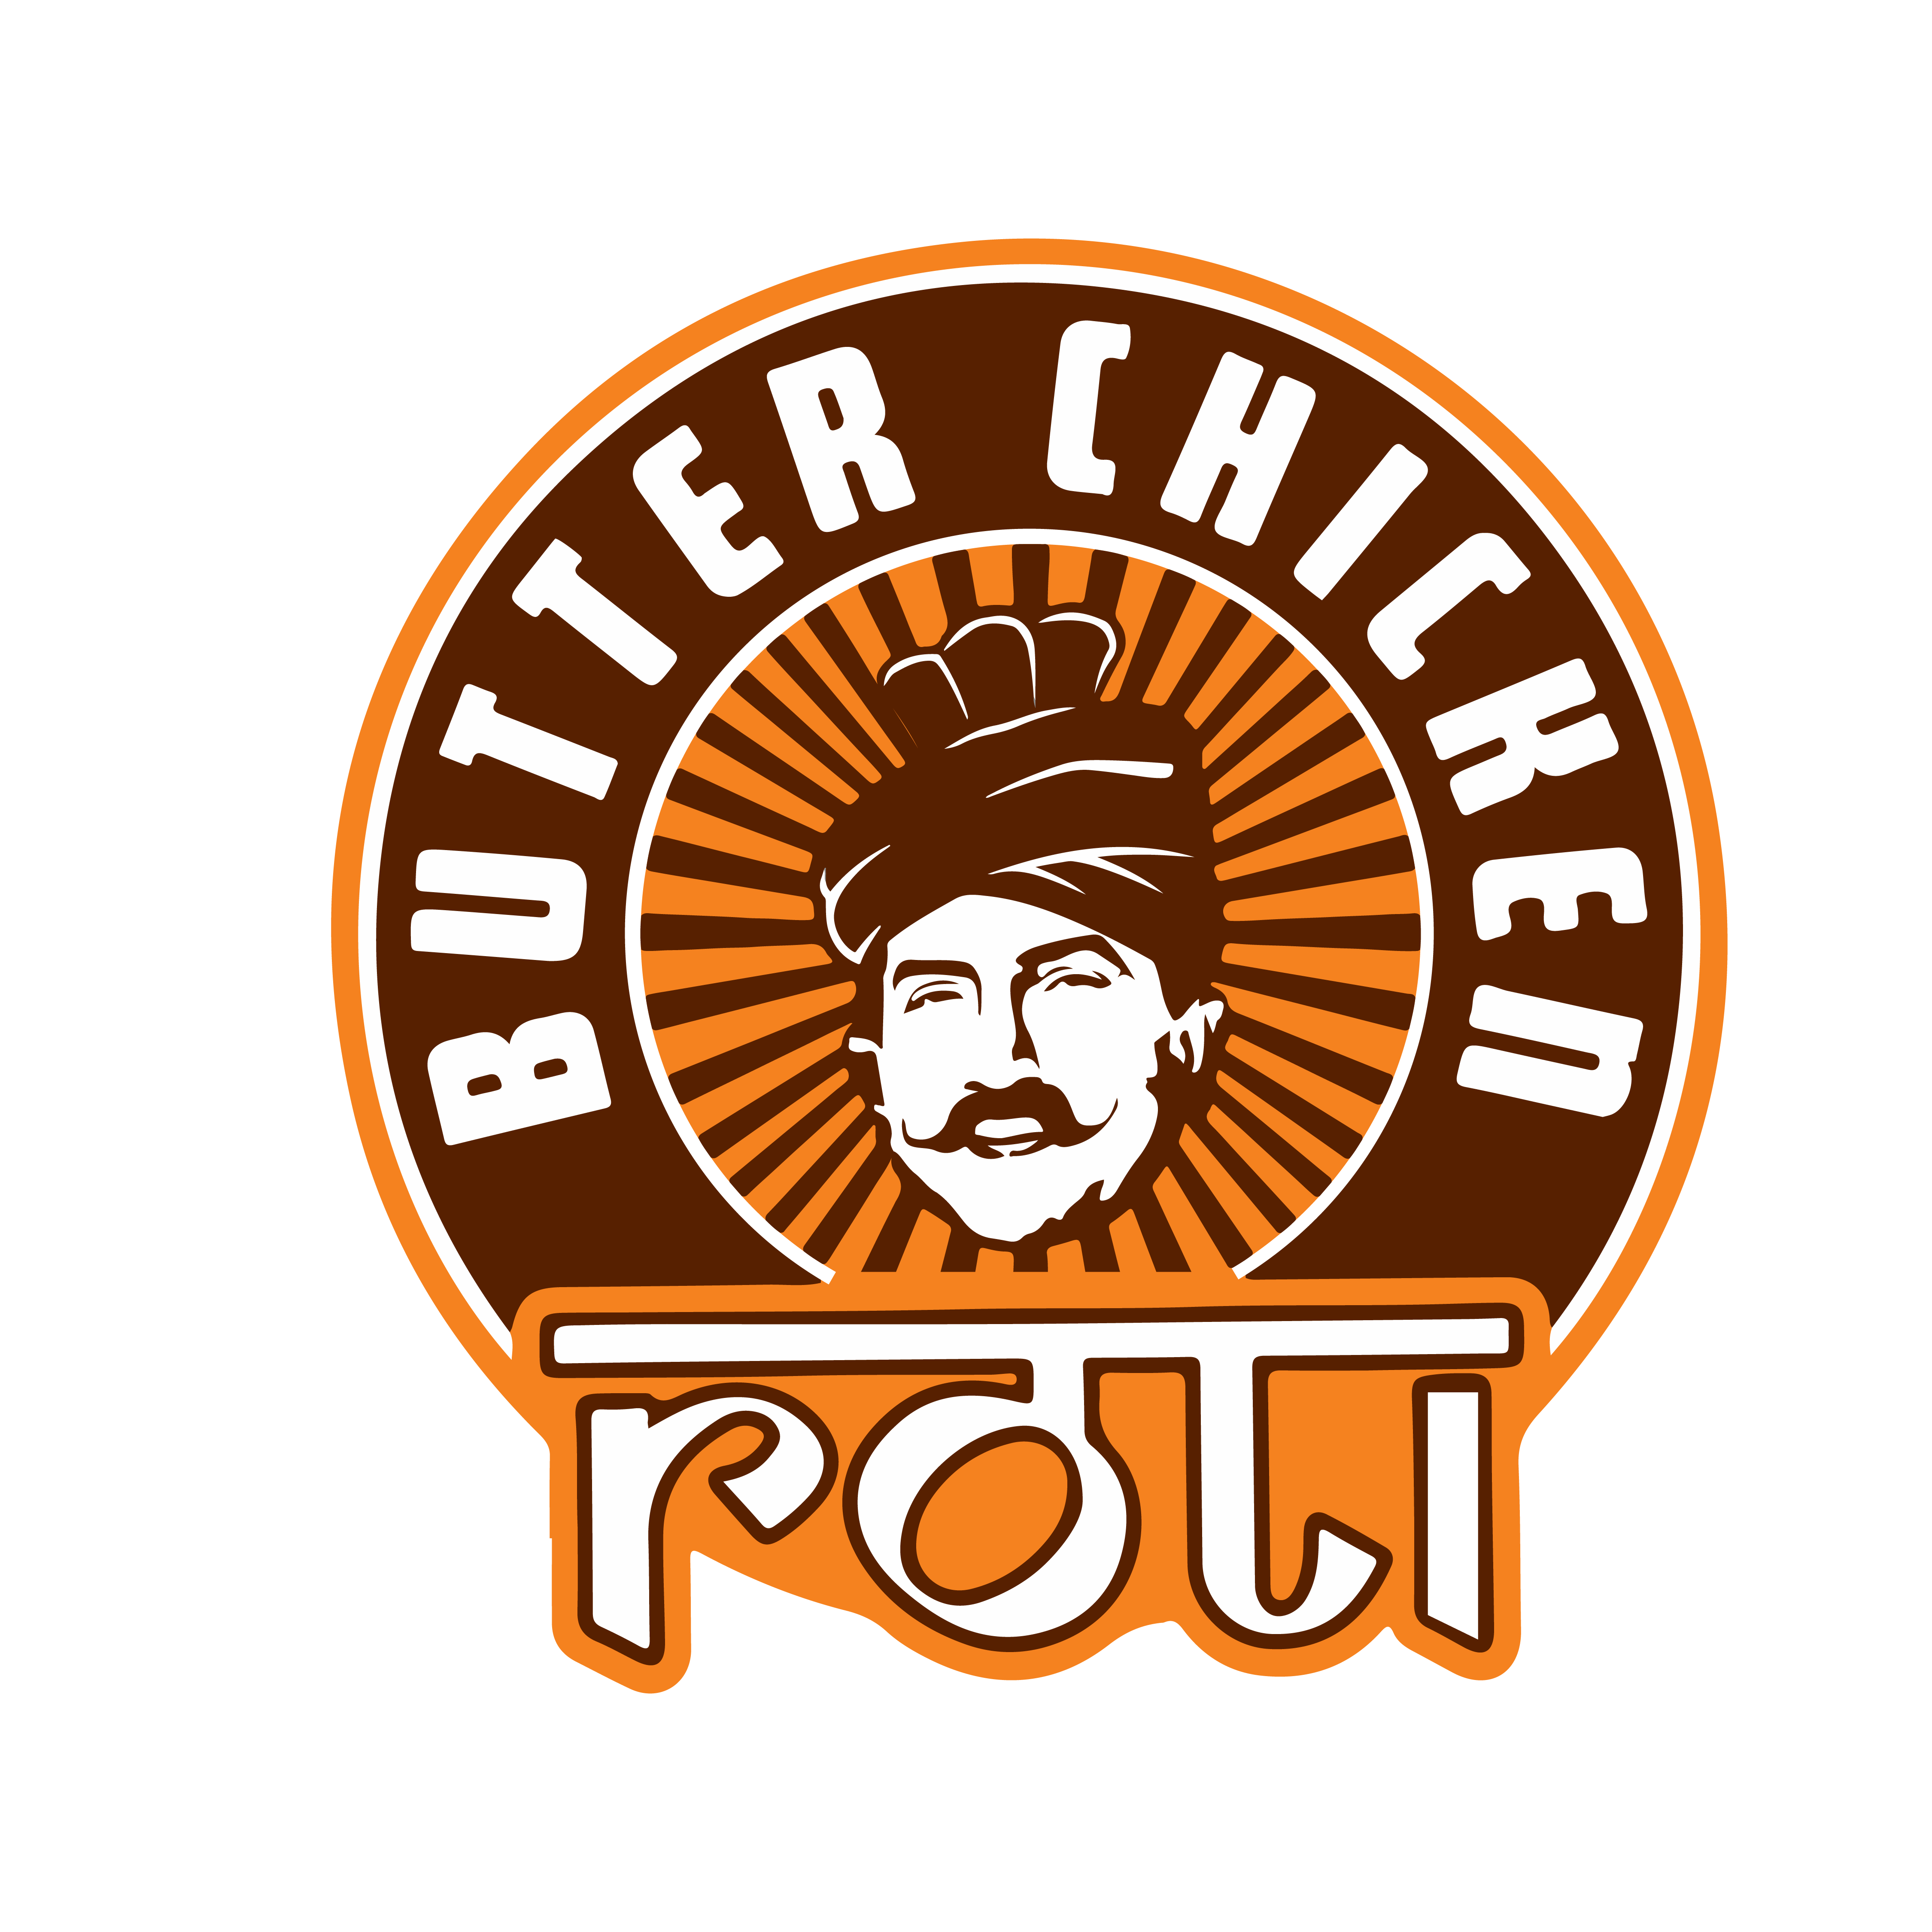 Butter Chicken Roti logo